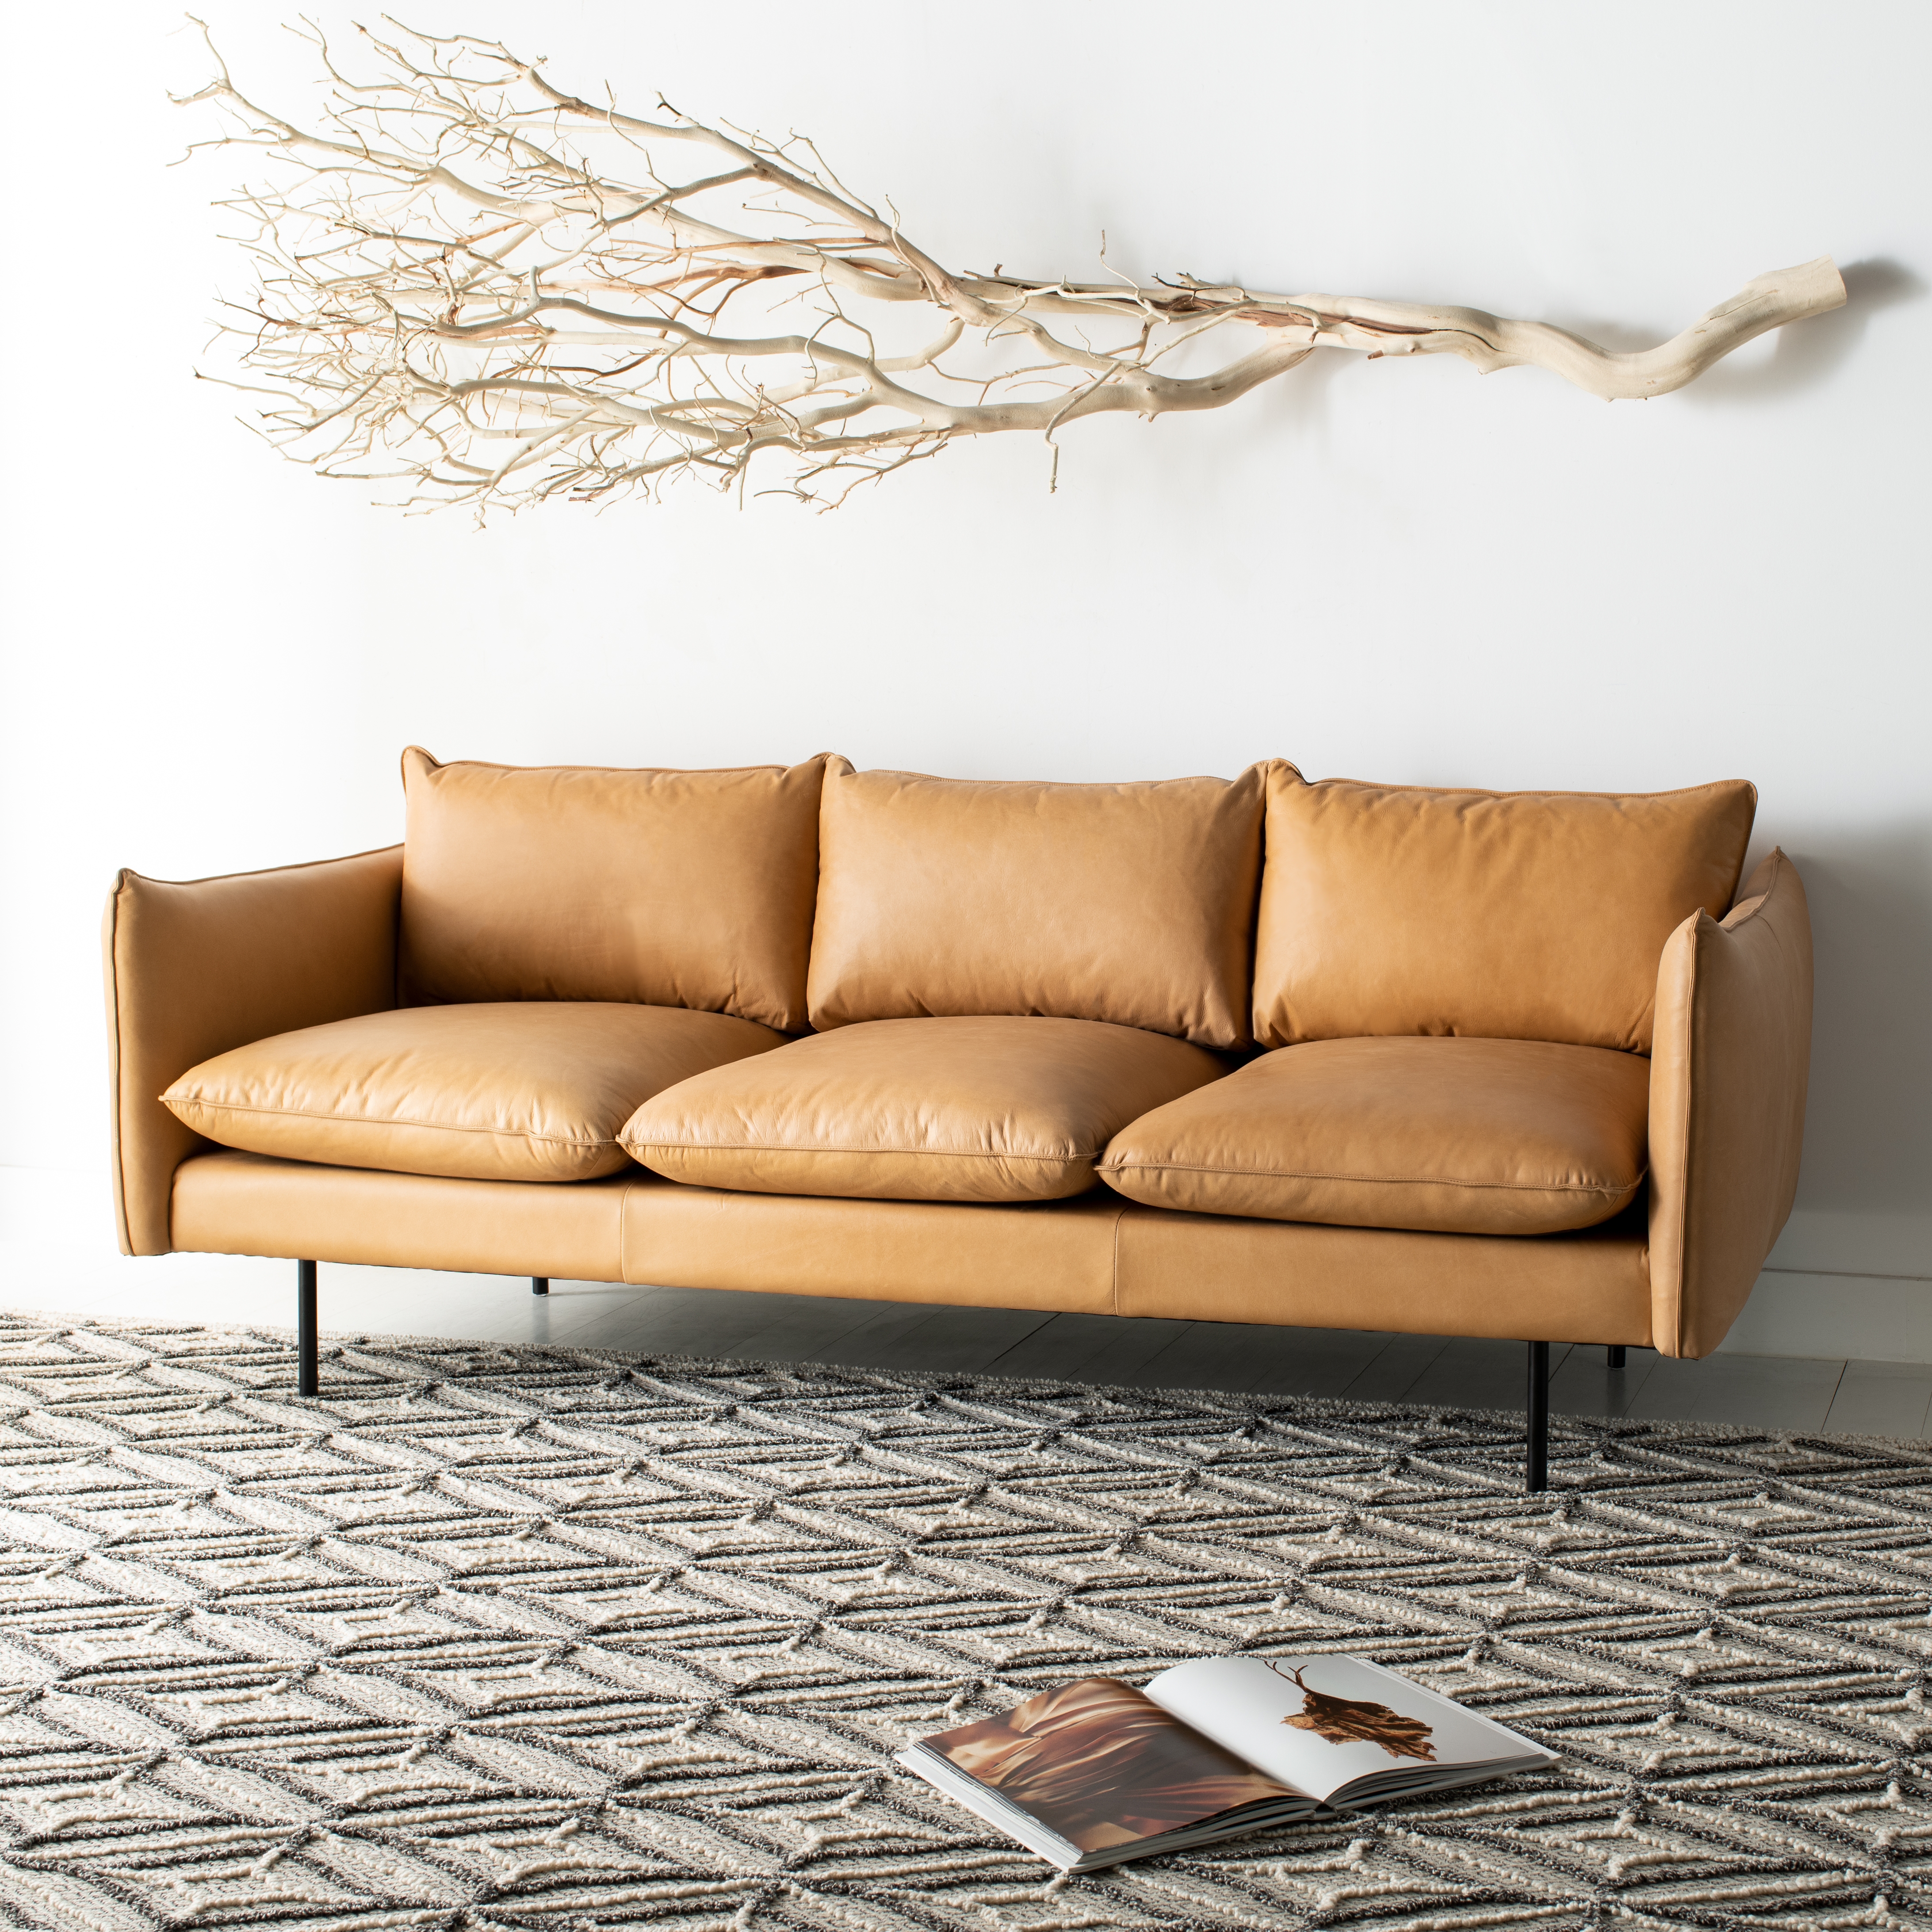 Gerlaich Italian Leather Sofa, Tan - Image 3